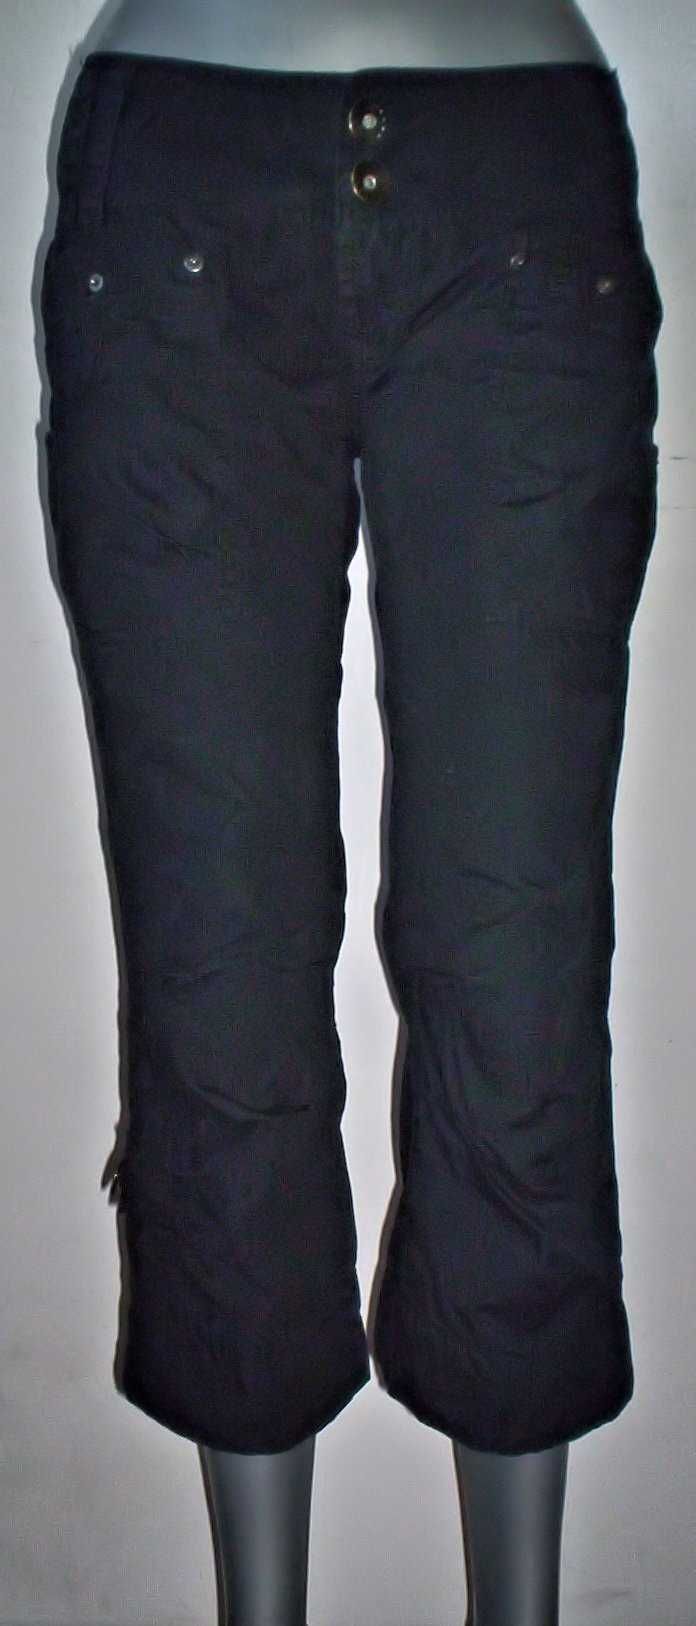 Pantaloni pescar negri 3/4 moderni skinny Blug kaki elastici buzunare